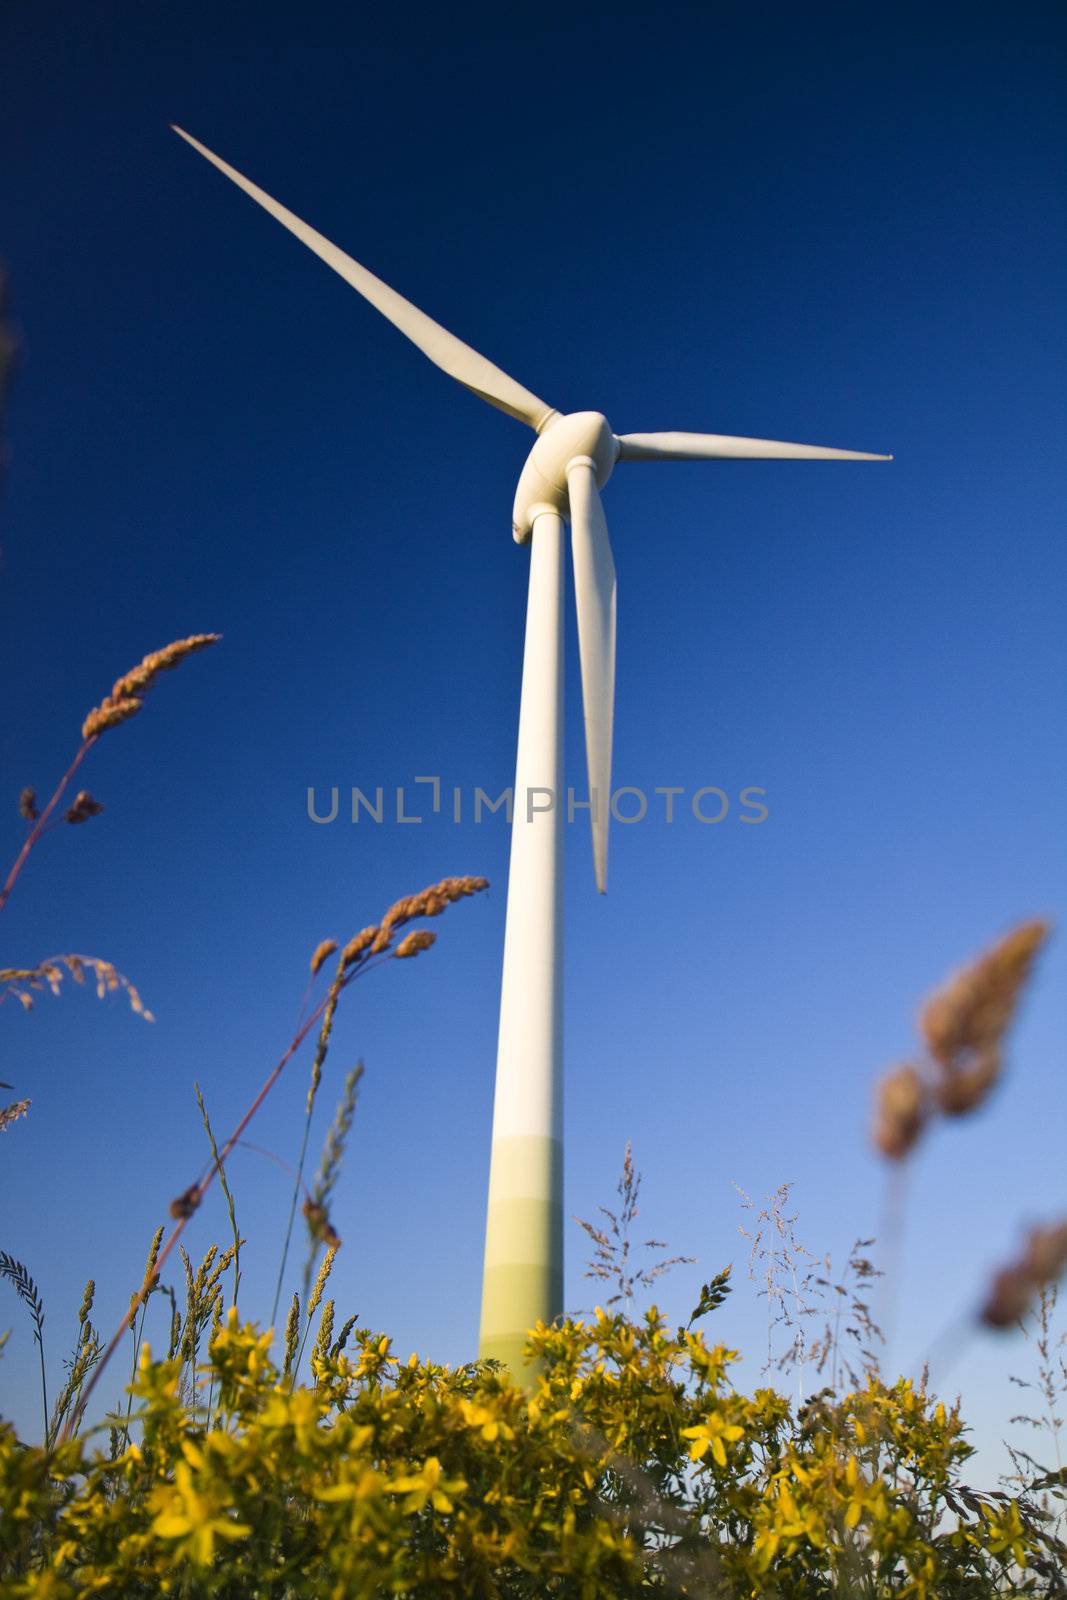 Windmills against a blue sky, alternative energy source